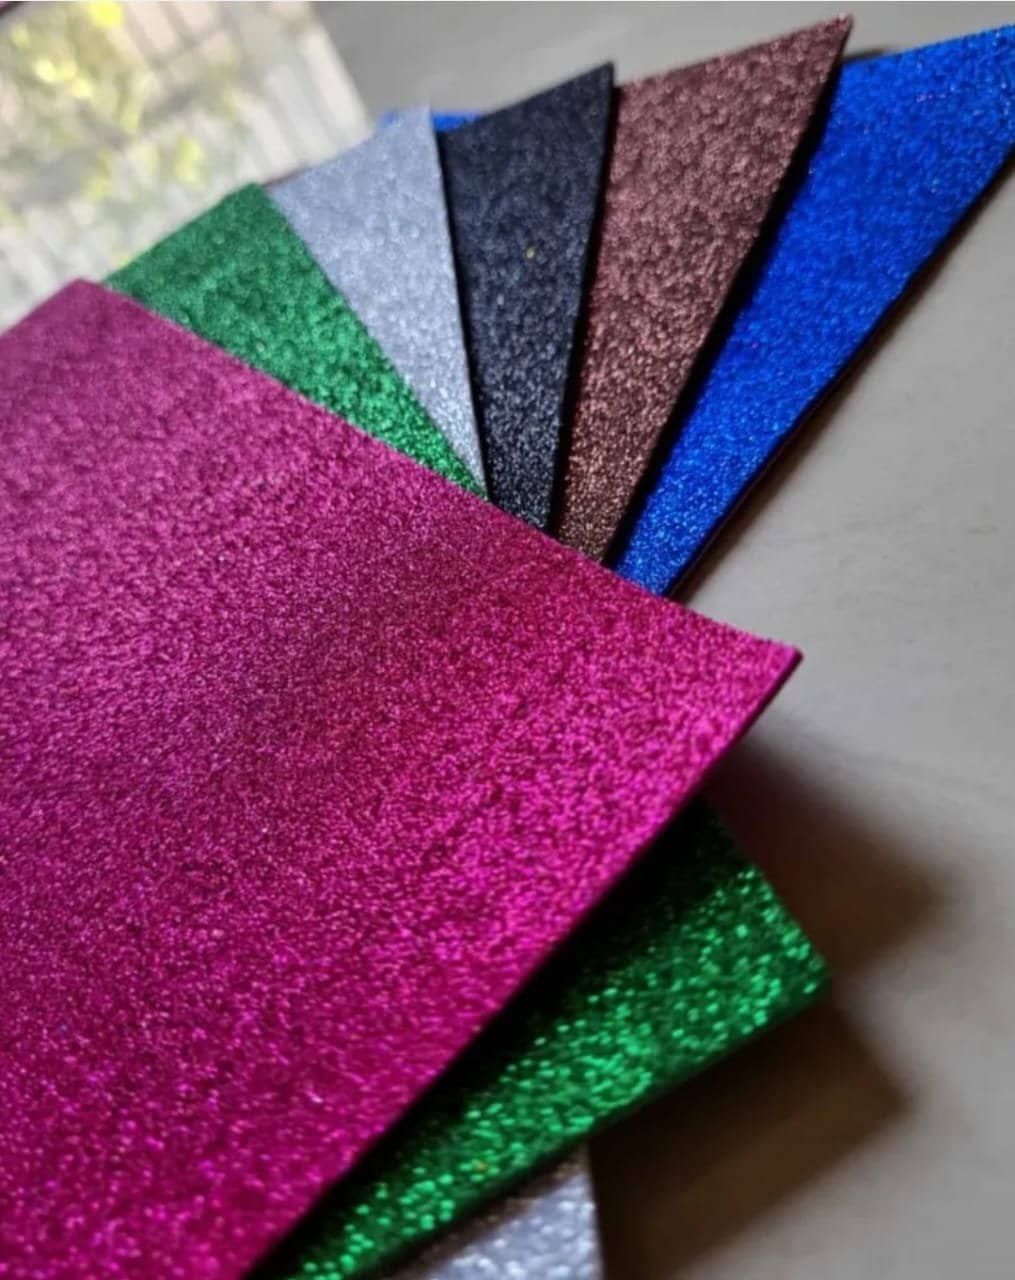 Spellbinders Pop-Up Die Cutting Glitter Foam Sheets - Black